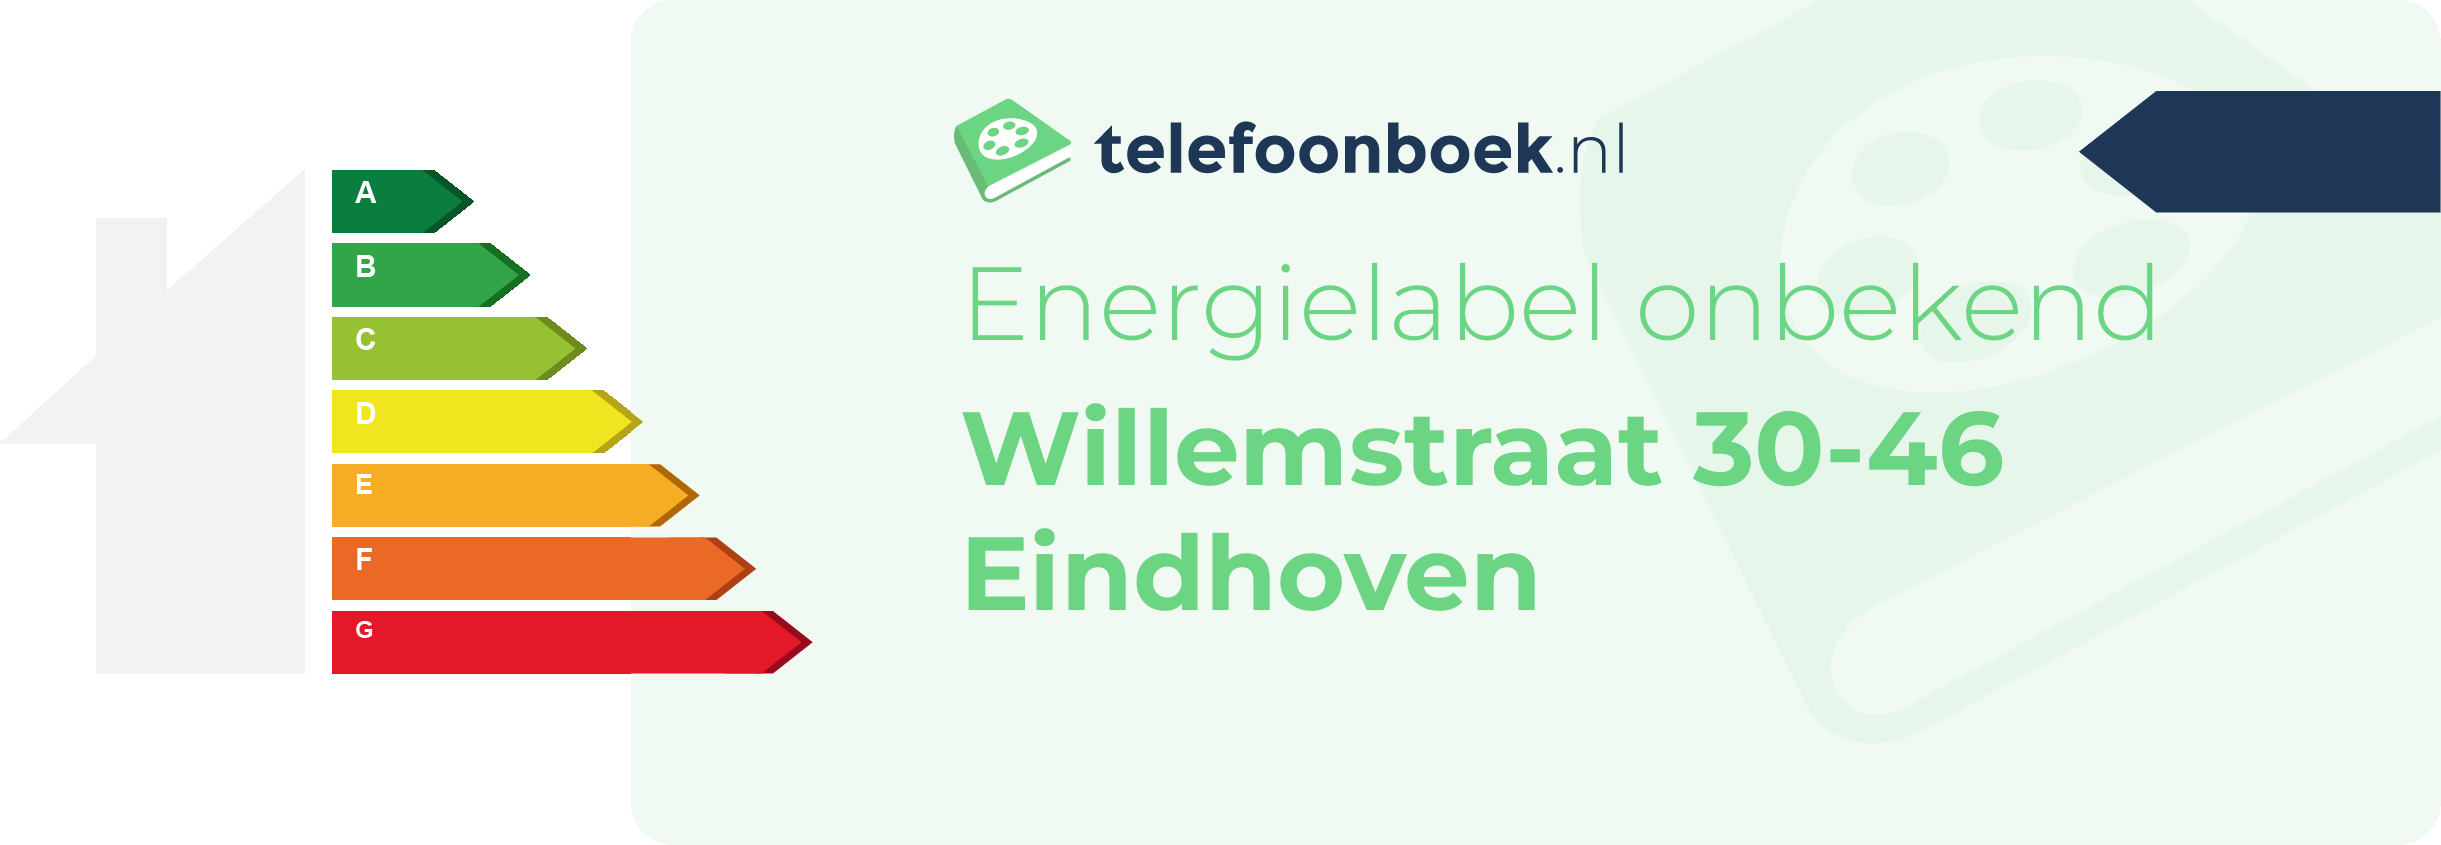 Energielabel Willemstraat 30-46 Eindhoven